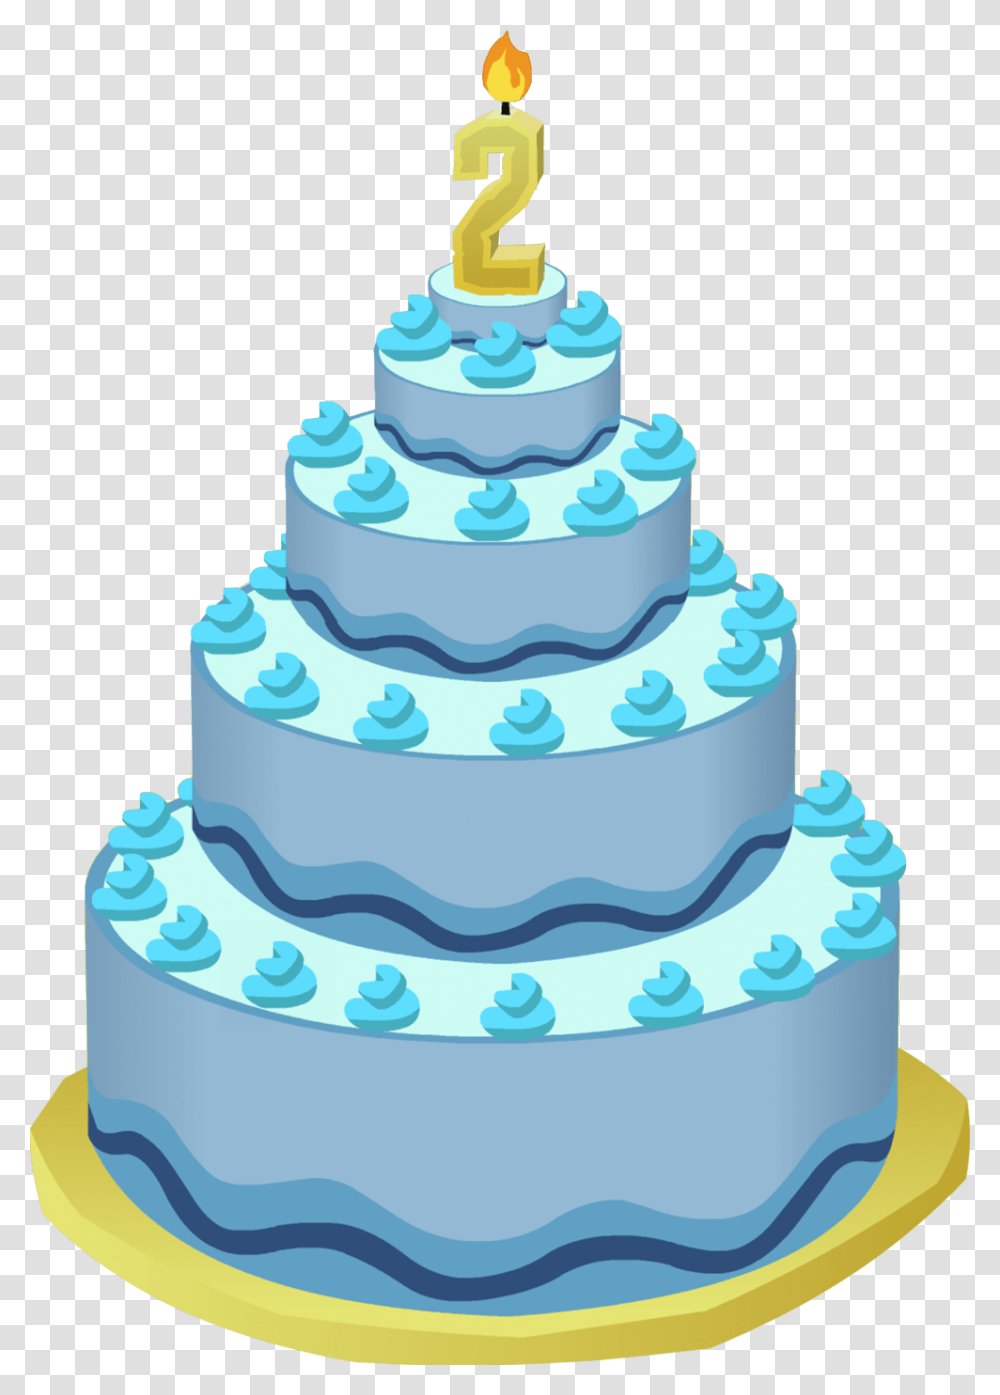 2nd Animal Jam Bday Cakes, Dessert, Food, Birthday Cake, Wedding Cake Transparent Png